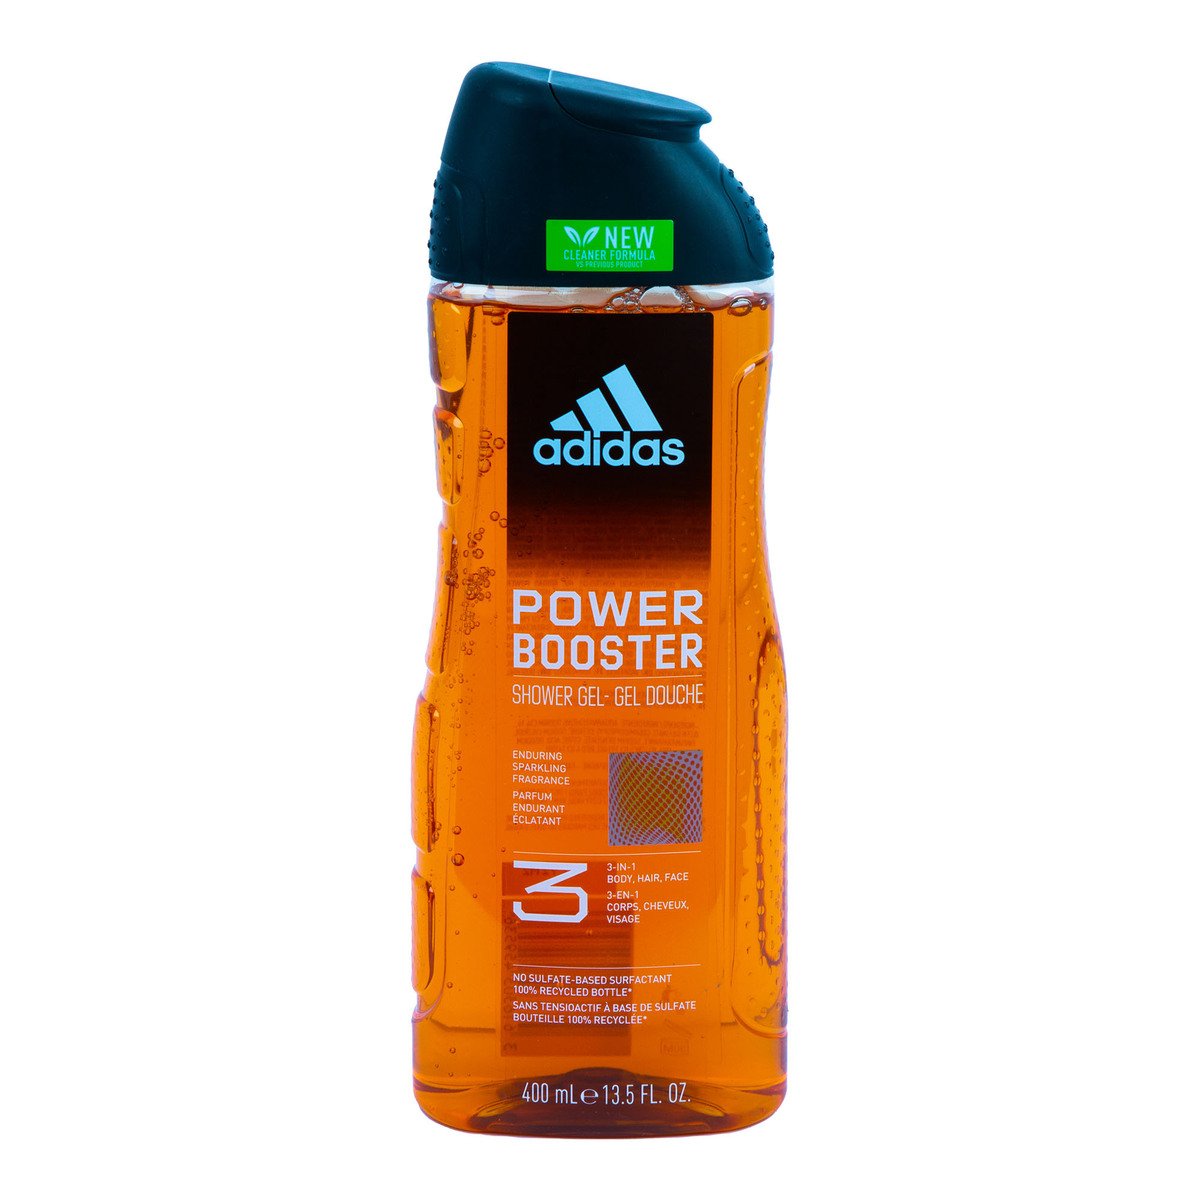 Adidas Power Booster Shower Gel 400 ml